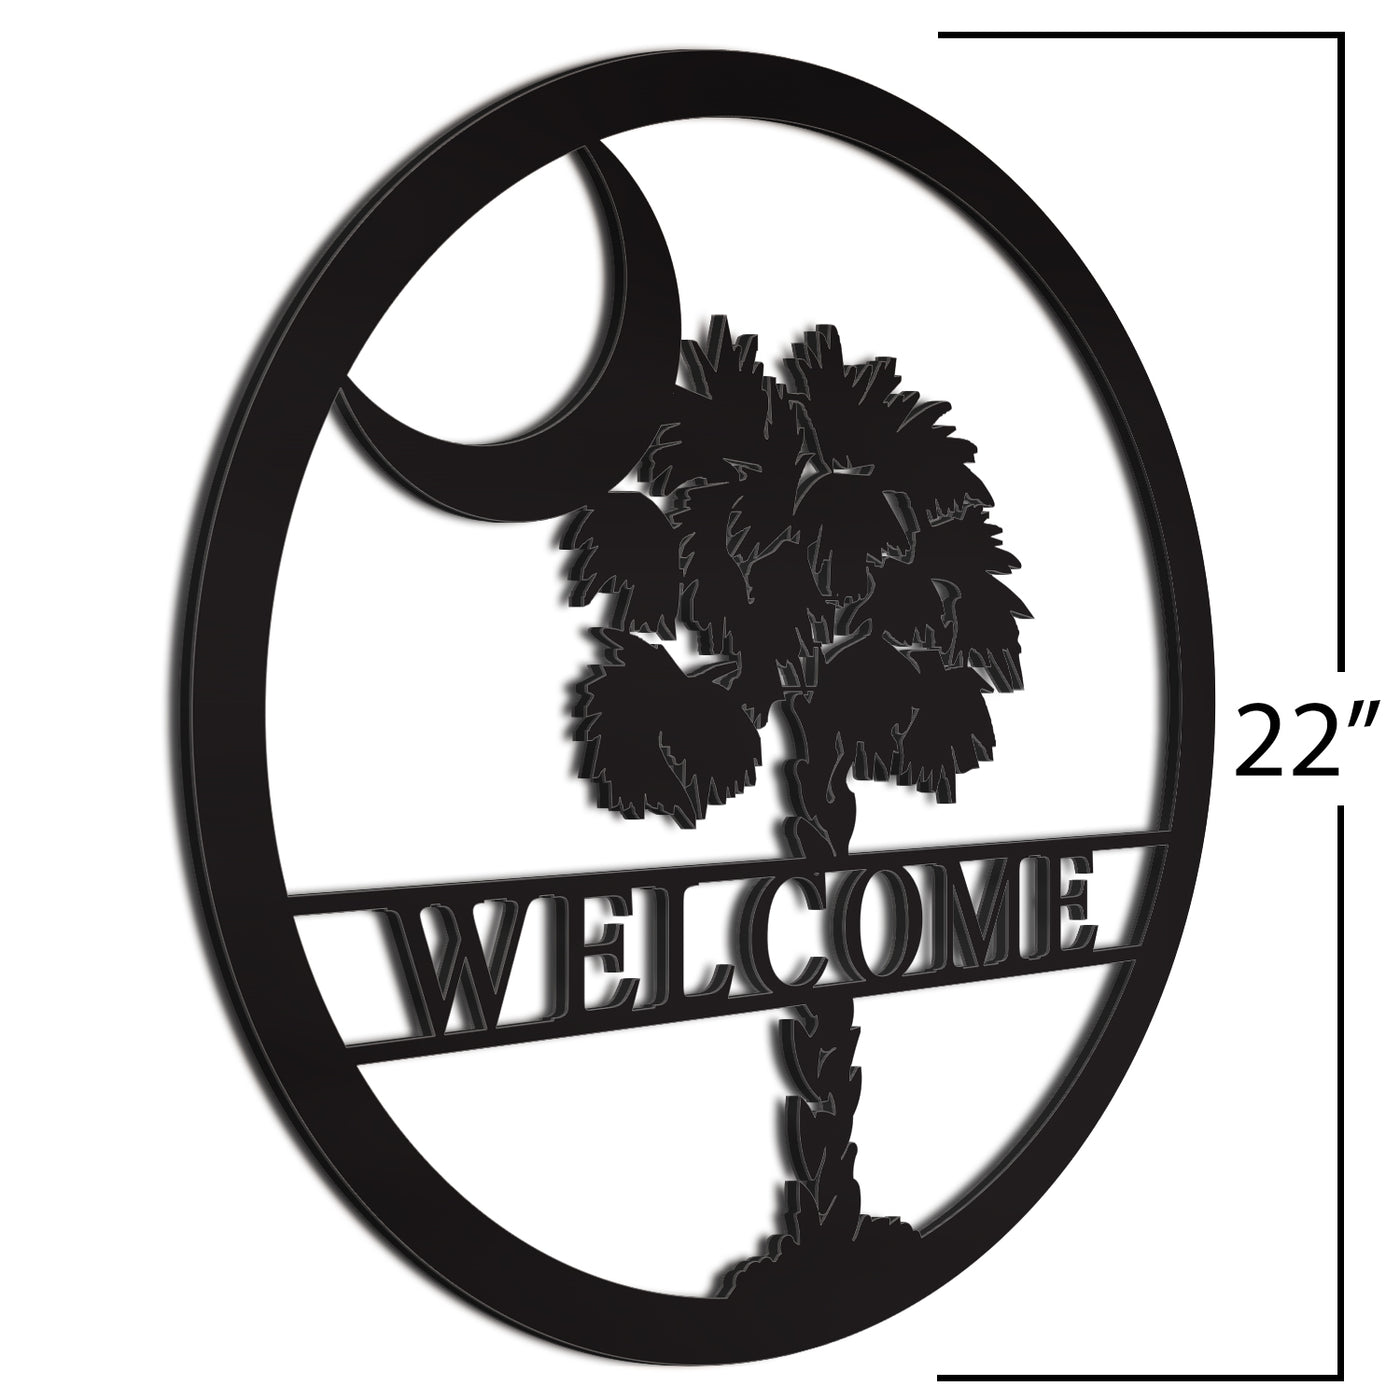 Palmetto Welcome Sign Black 22 Inch